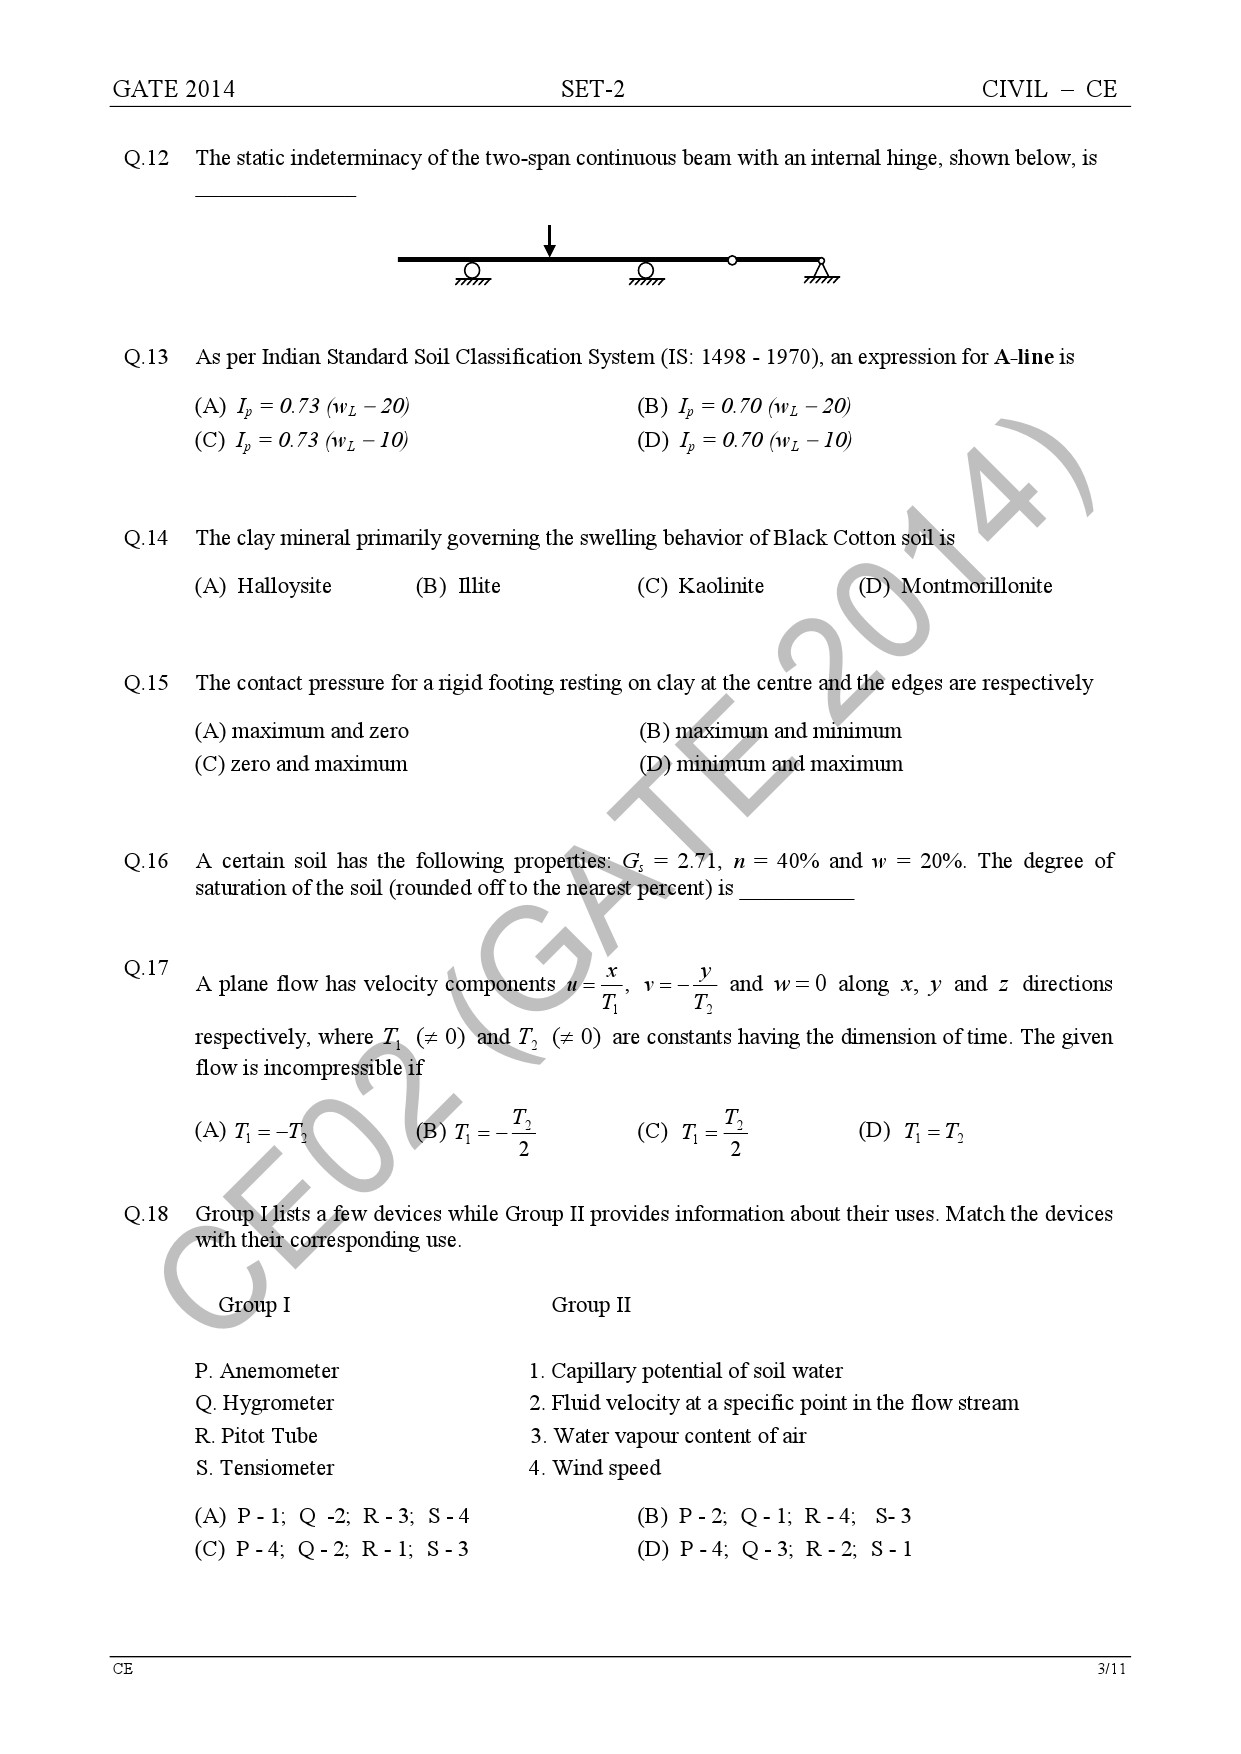 GATE Exam Question Paper 2014 Civil Engineering Set 2 9